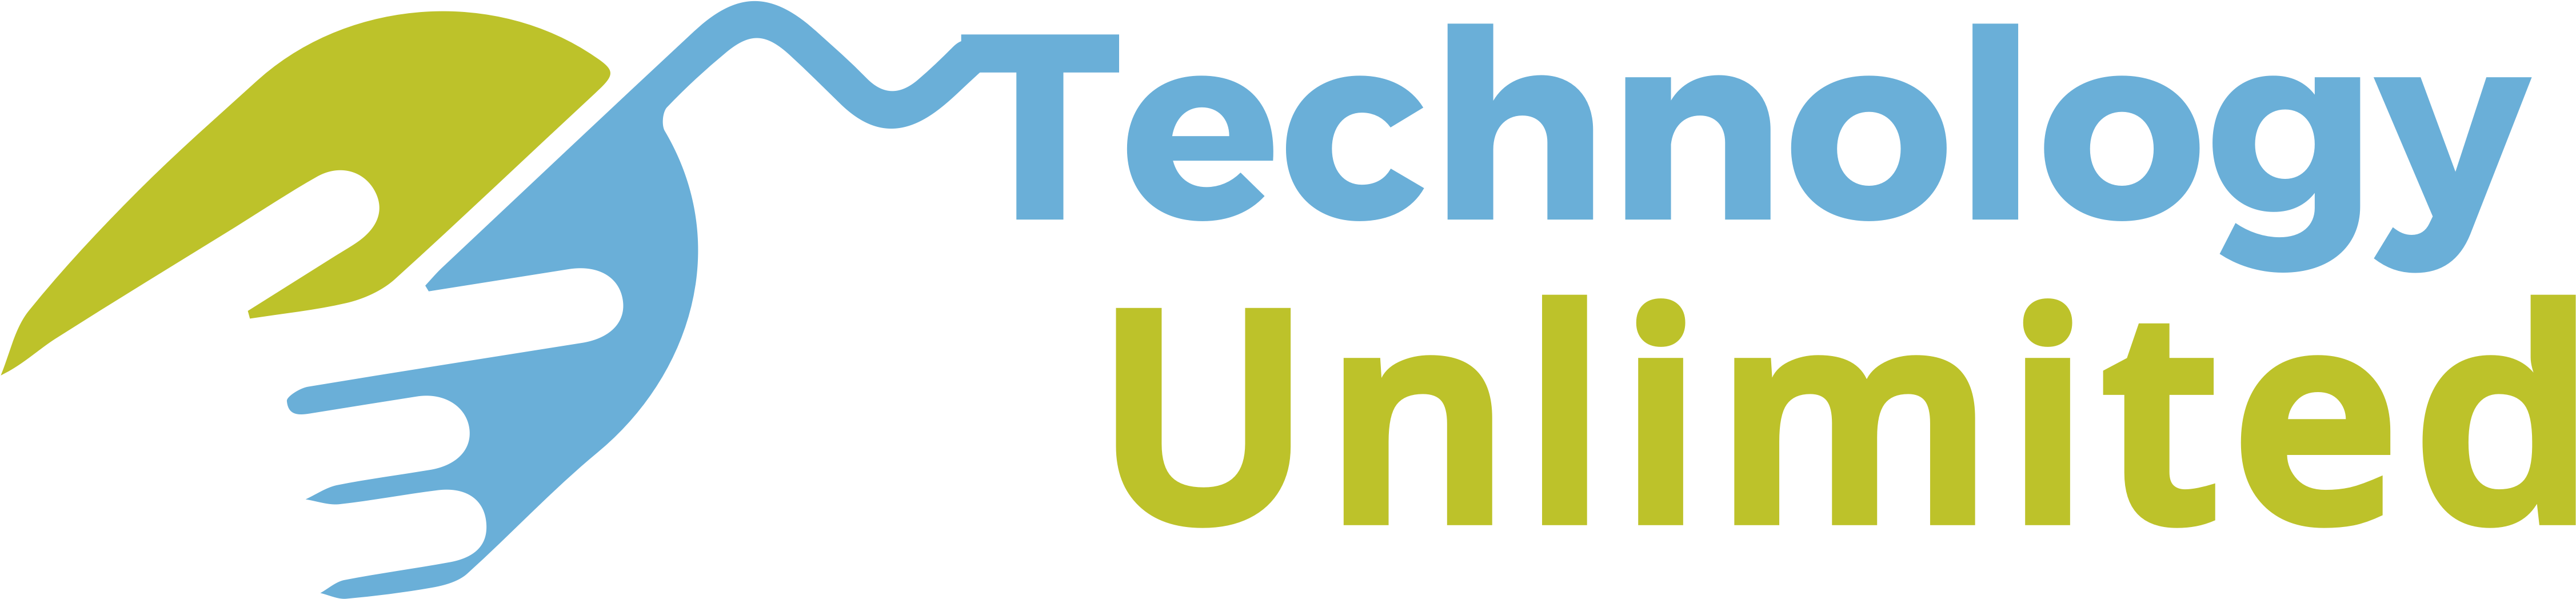 Technology Unlimited Ga, Llc - Computer Technology Logo Png (5000x1575), Png Download